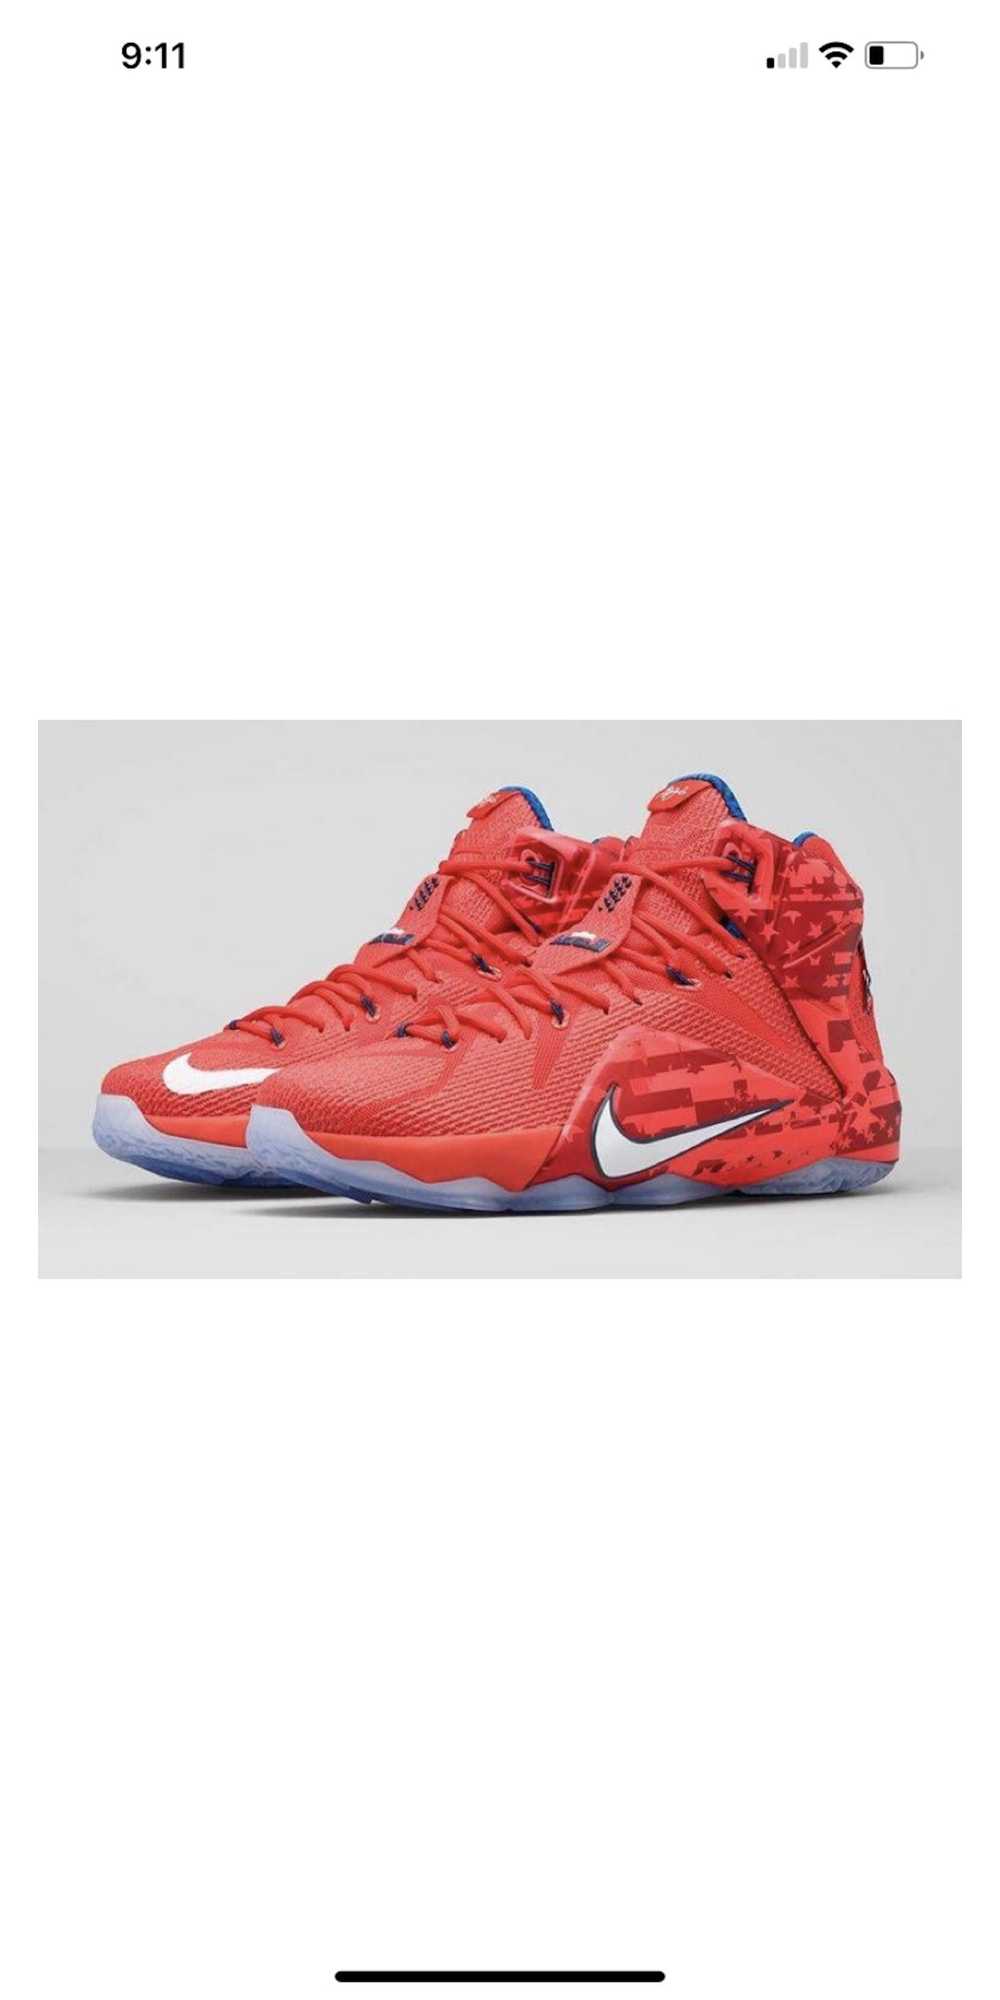 Nike LeBron 12 USA 2015 - image 2